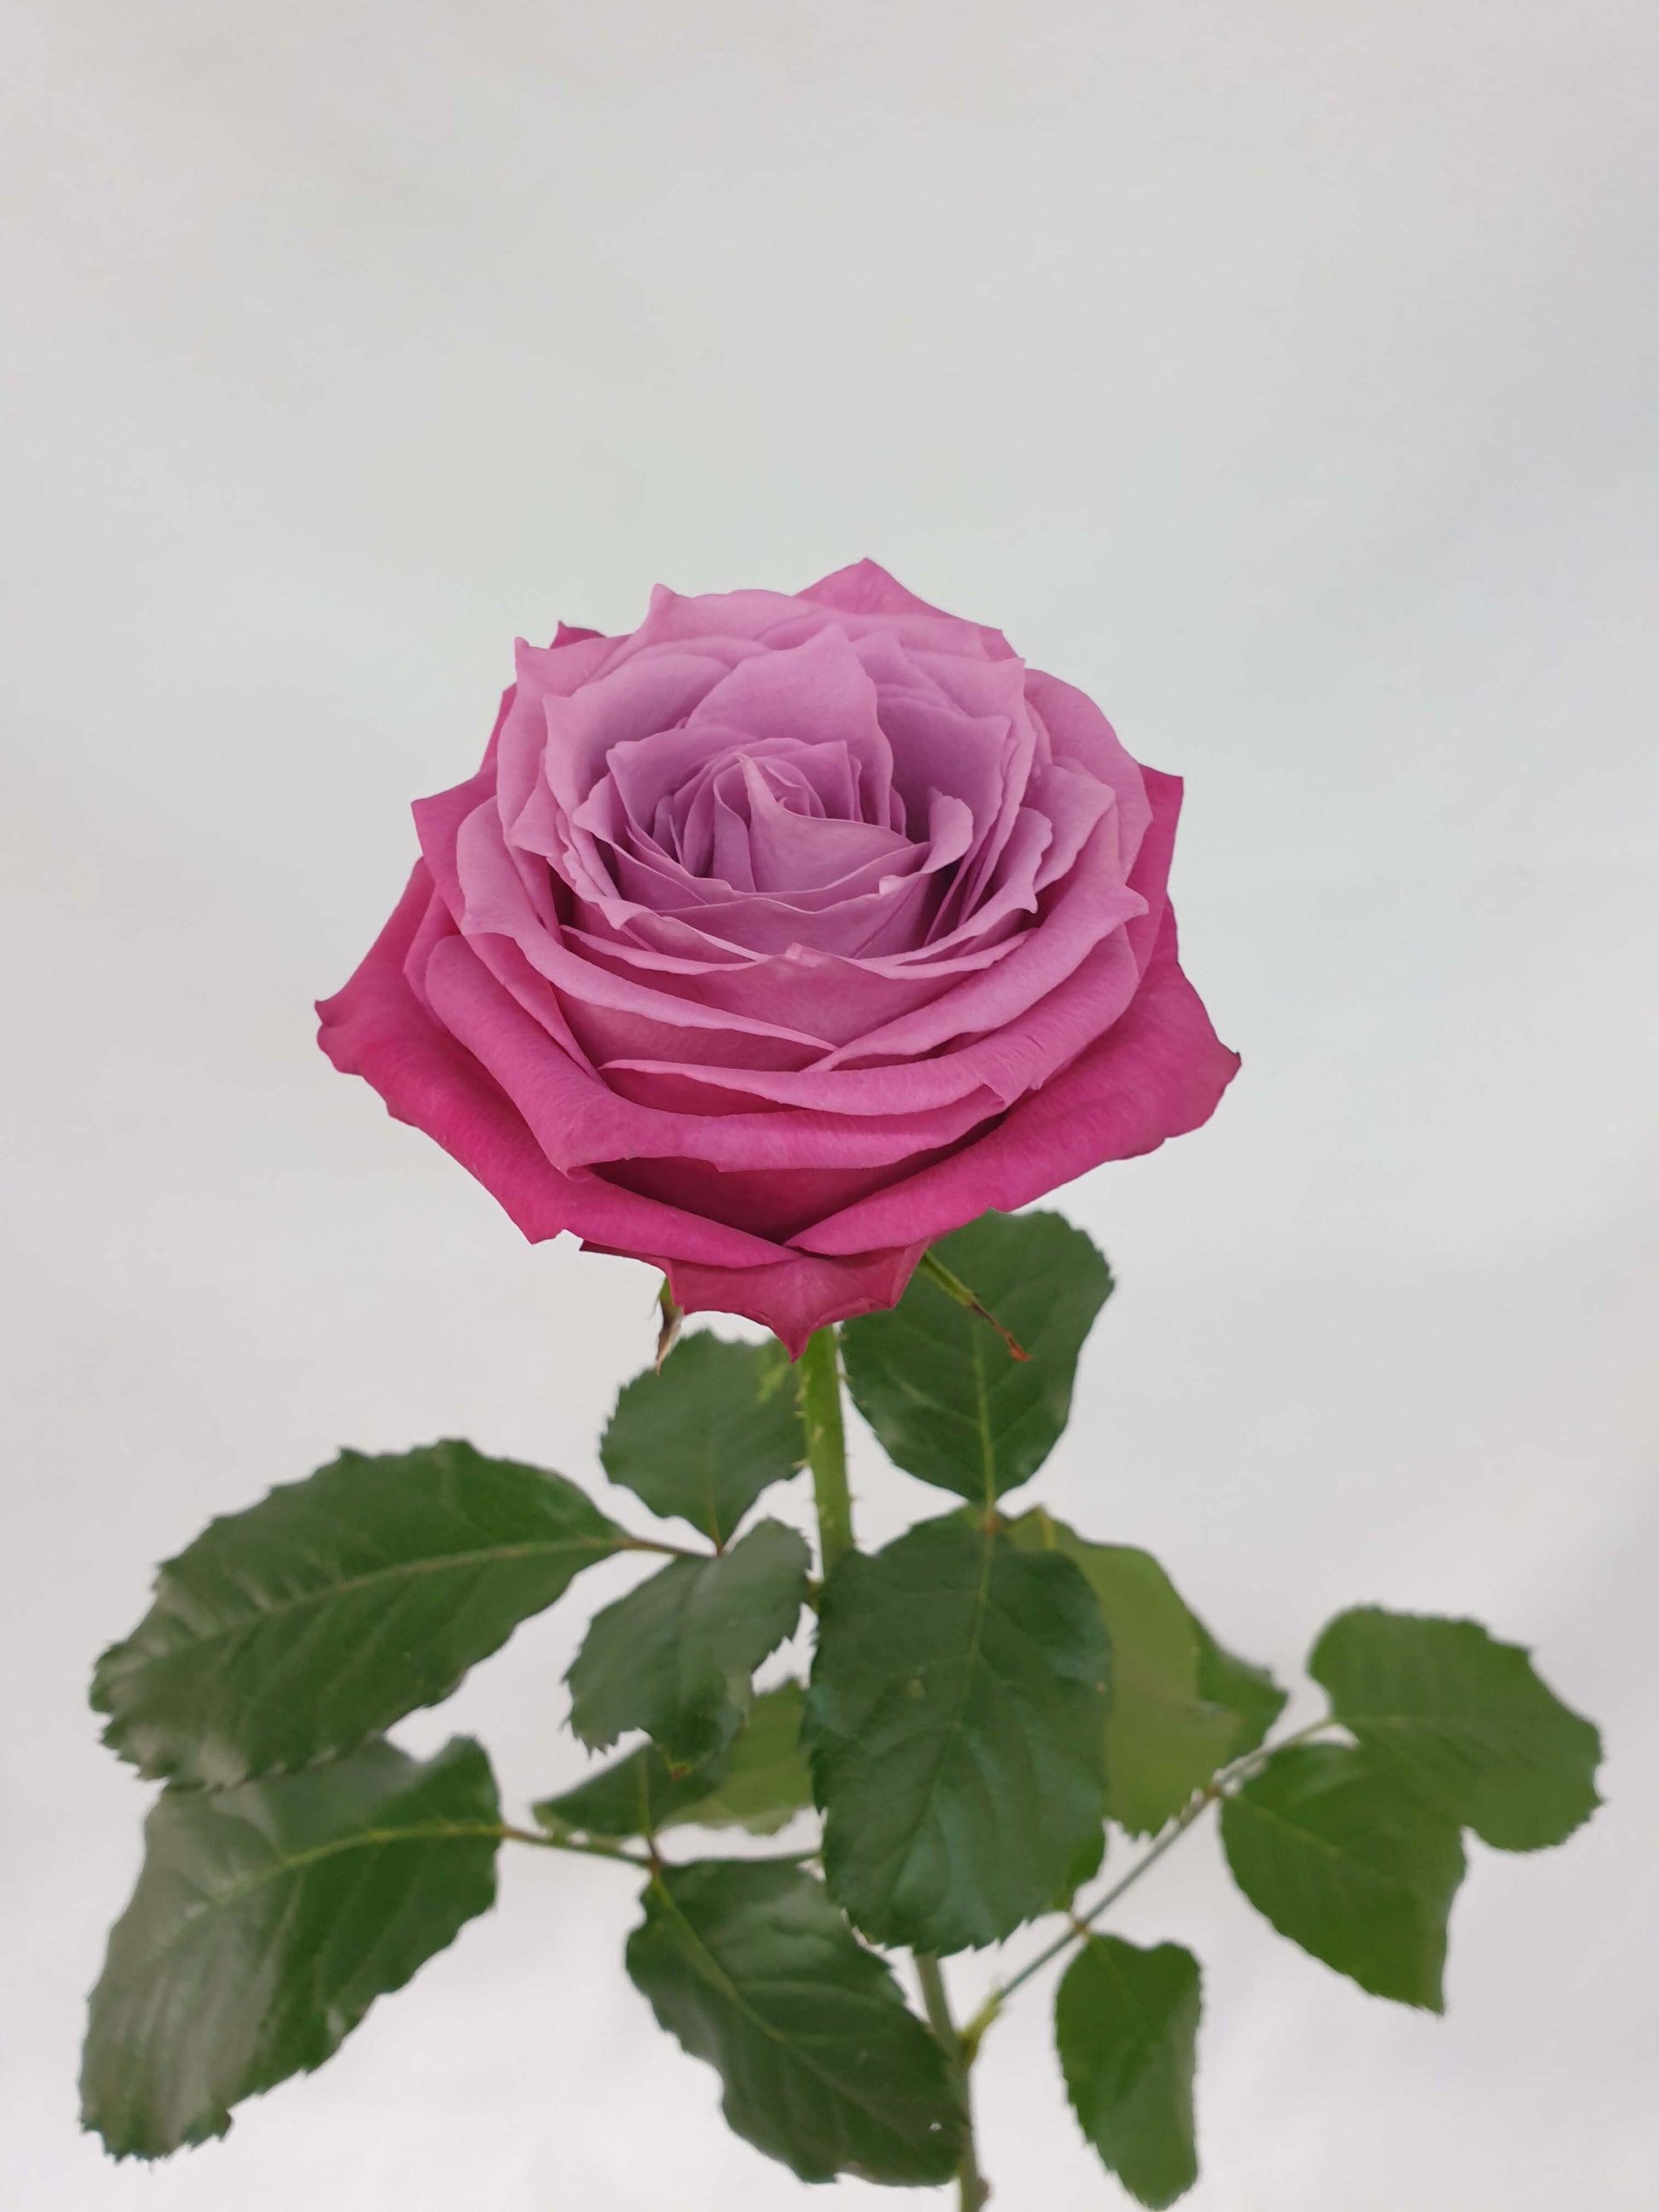 A deep purple variety rose bloom.